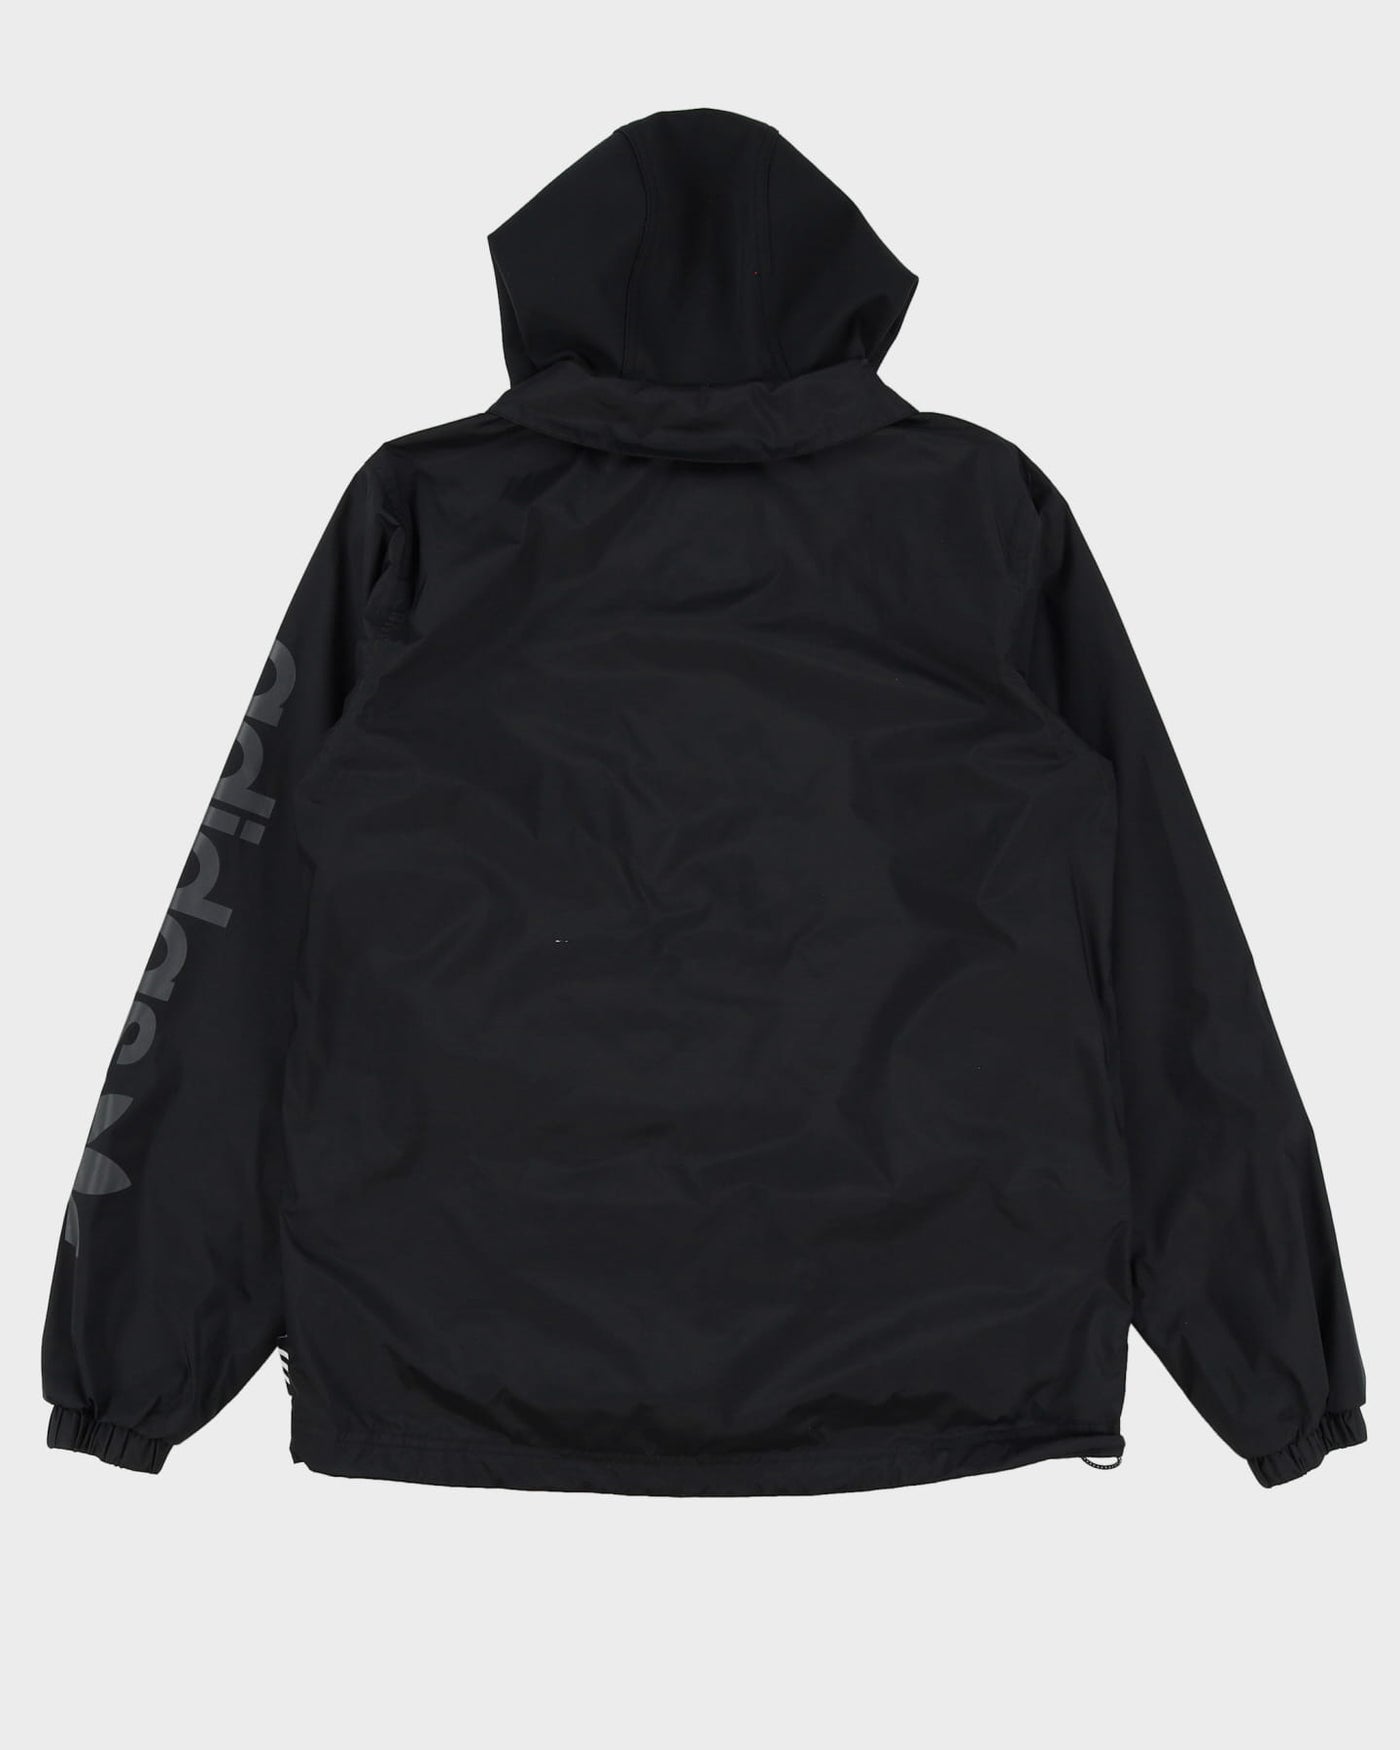 00s Adidas Black Hooded Anorak Rain Jacket - S